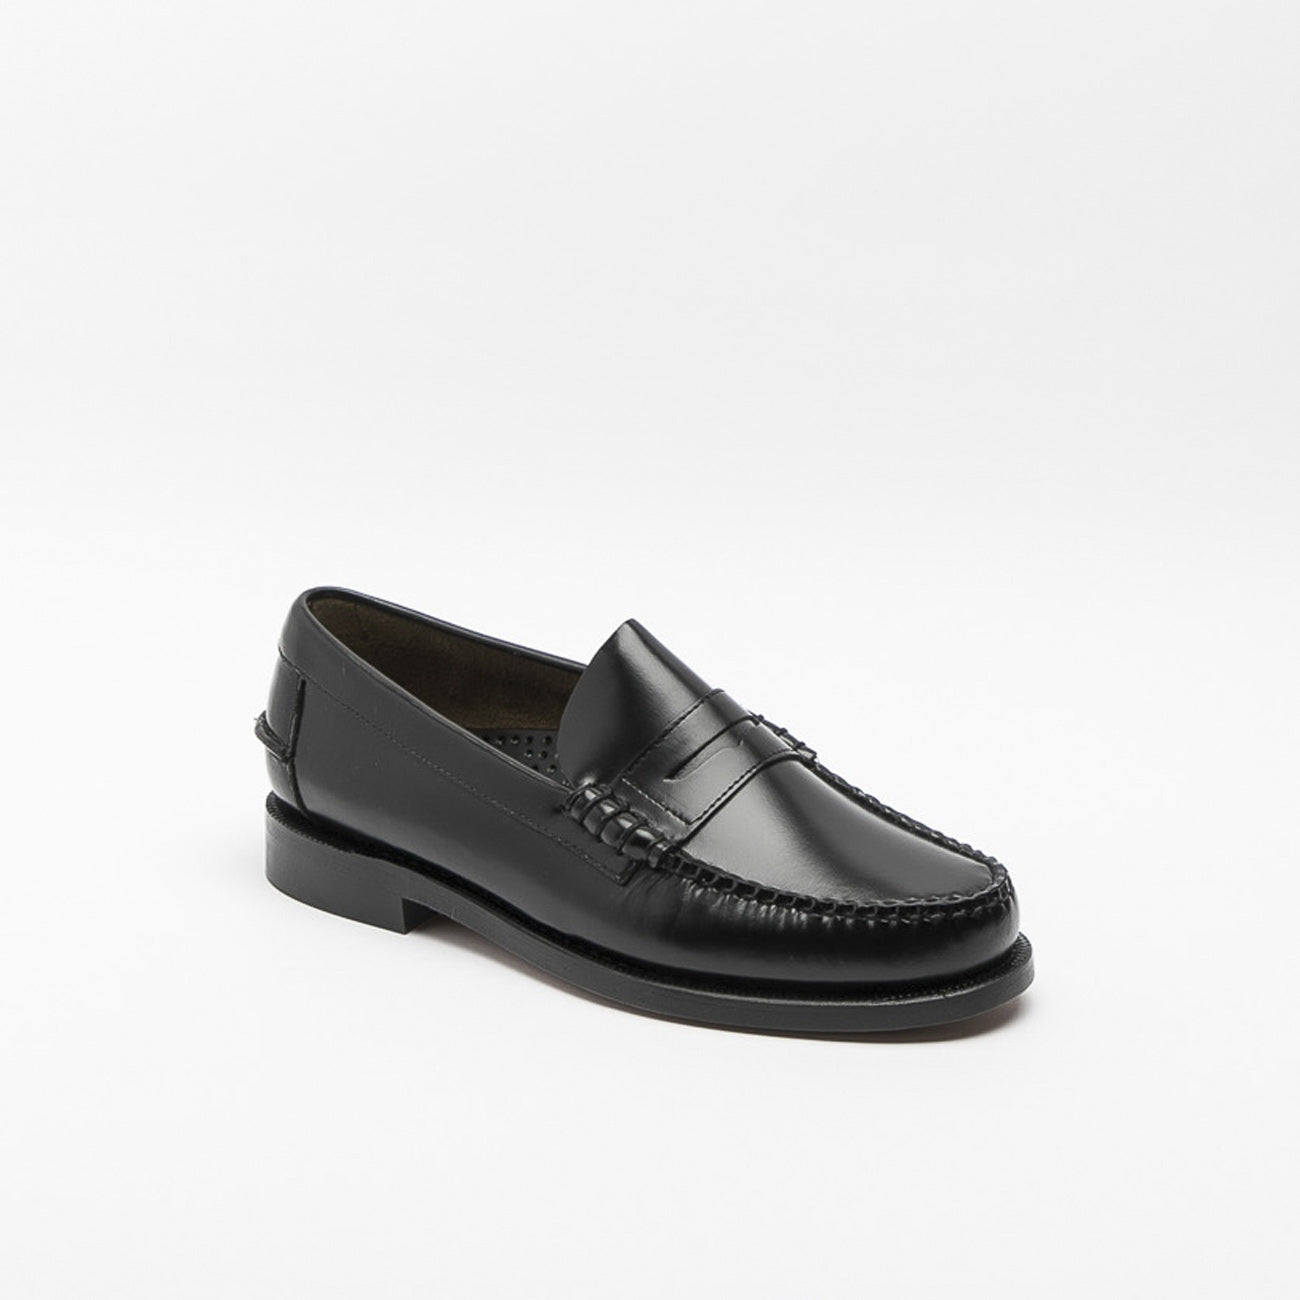 Sebago Classic Dan black brushed leather penny loafer